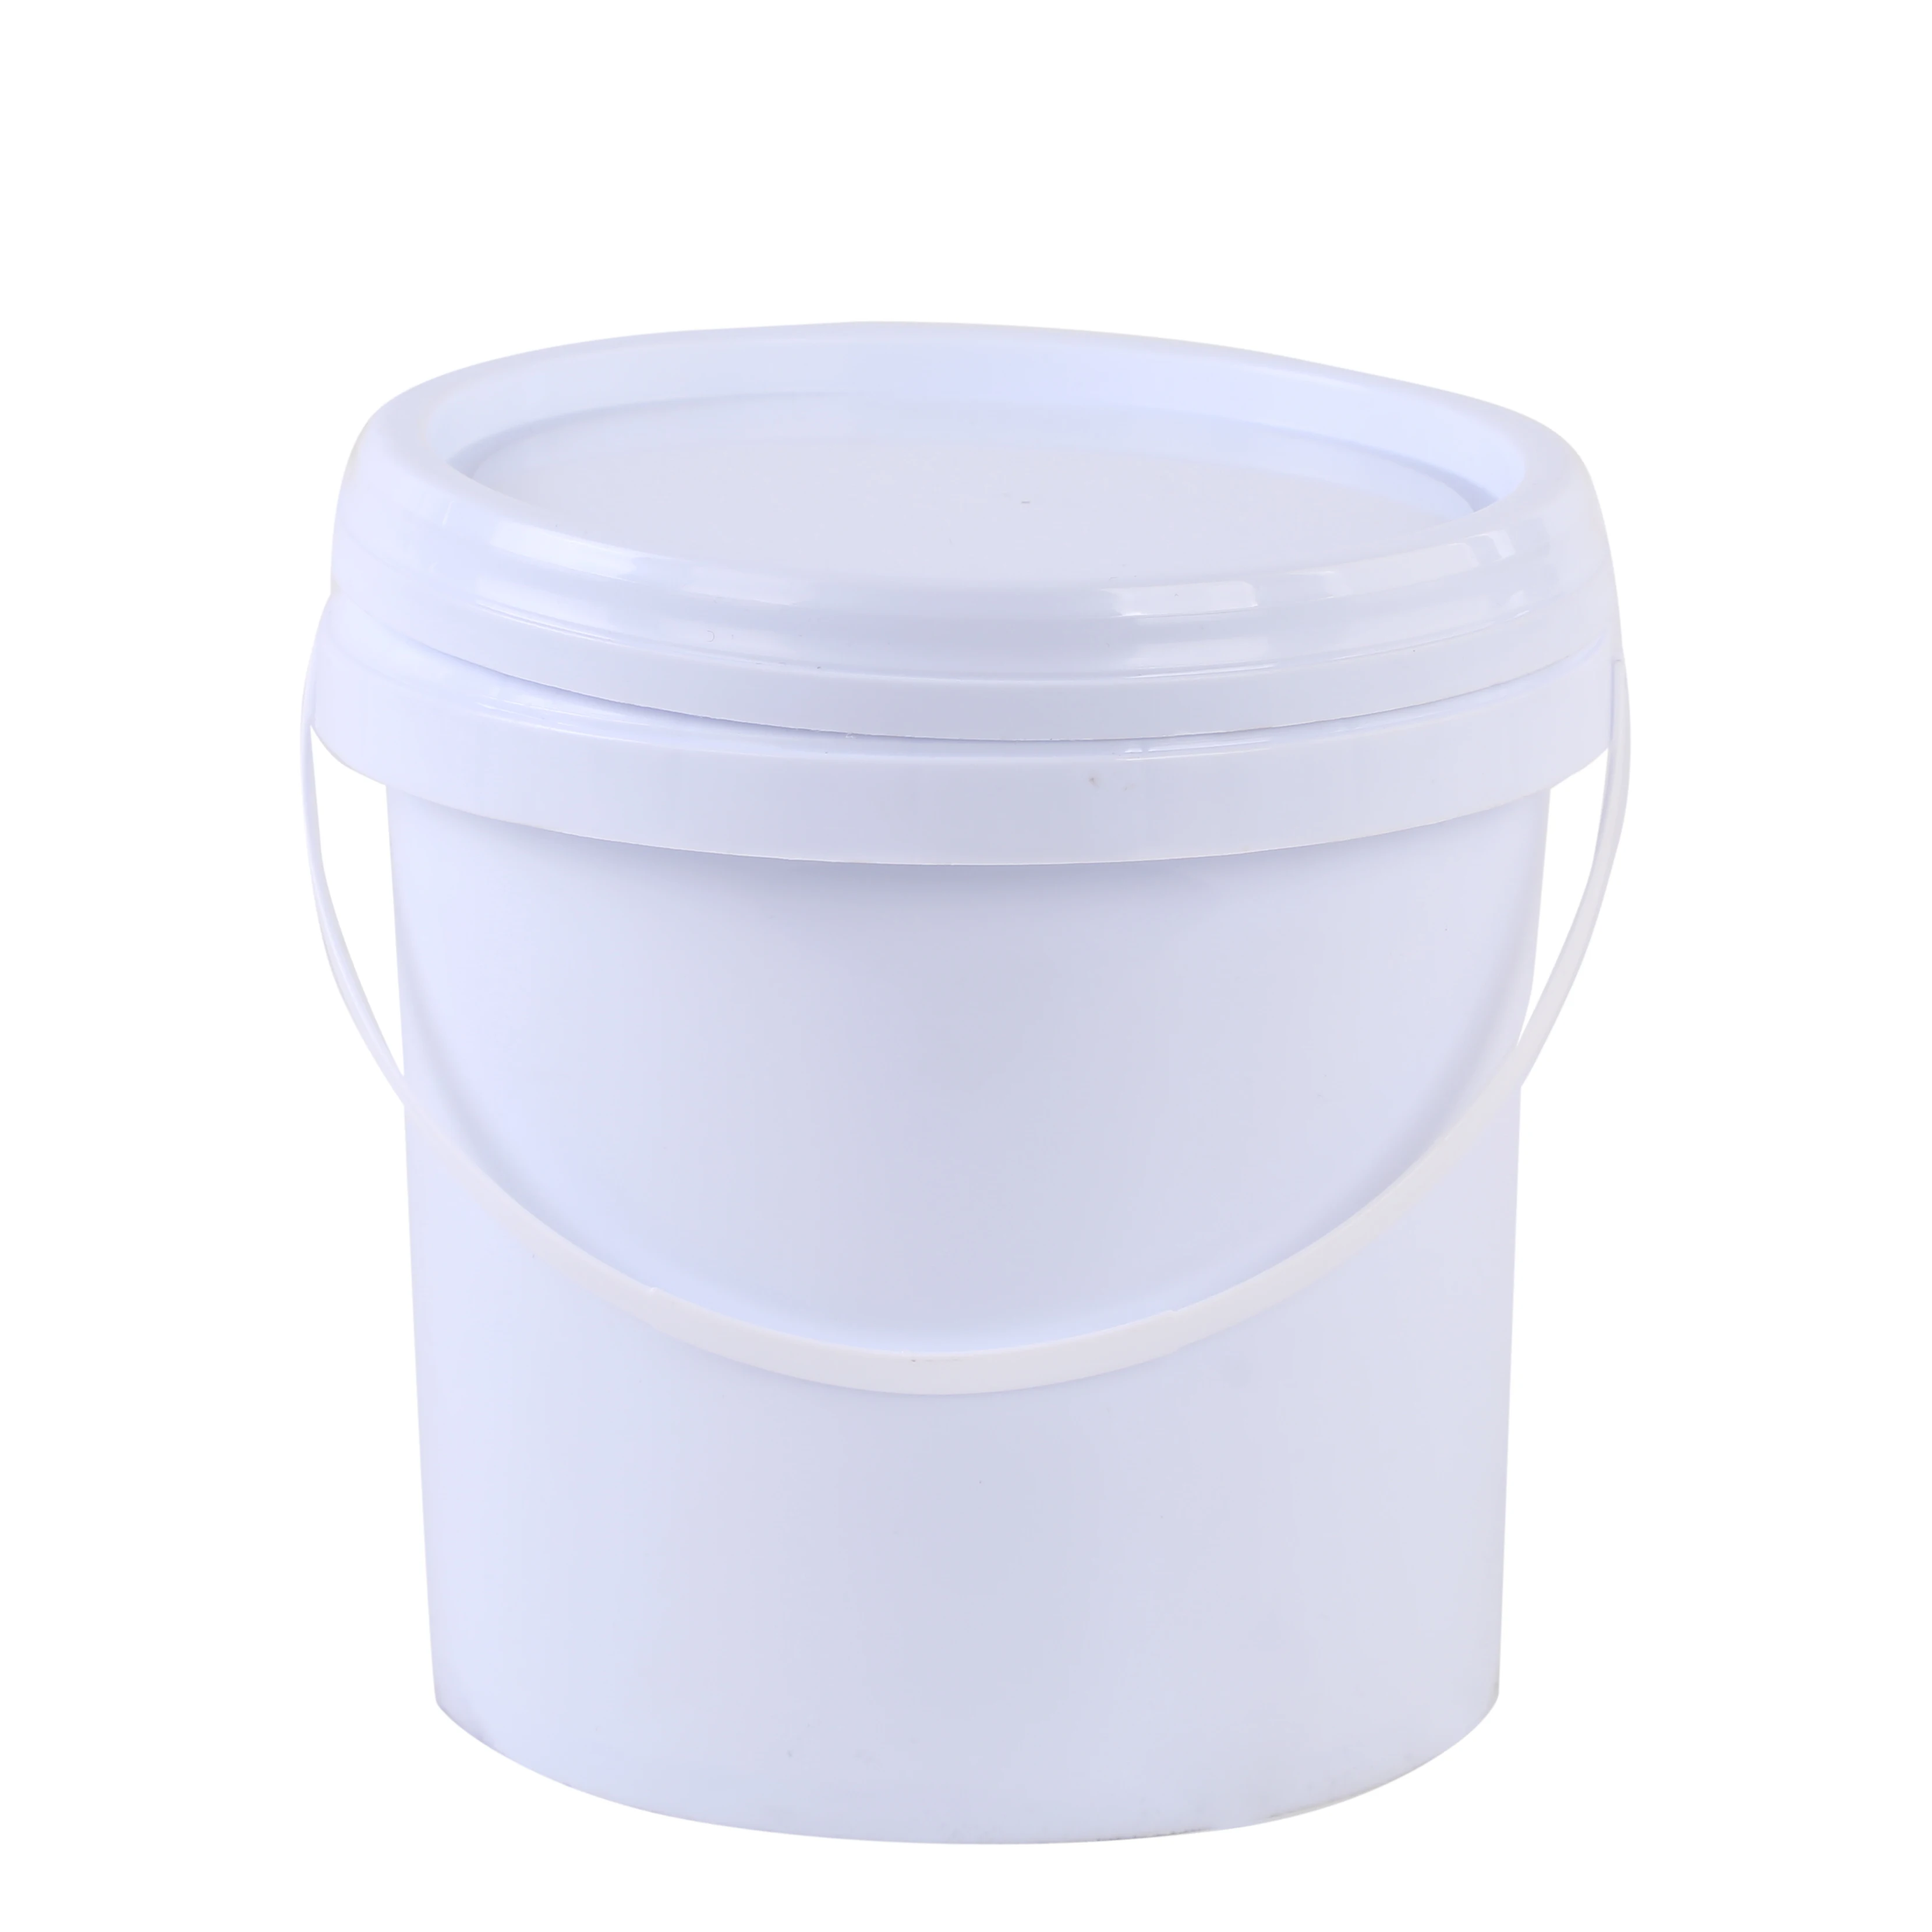 1 Gallon BPA Free Food Grade Round Plastic Bucket with White